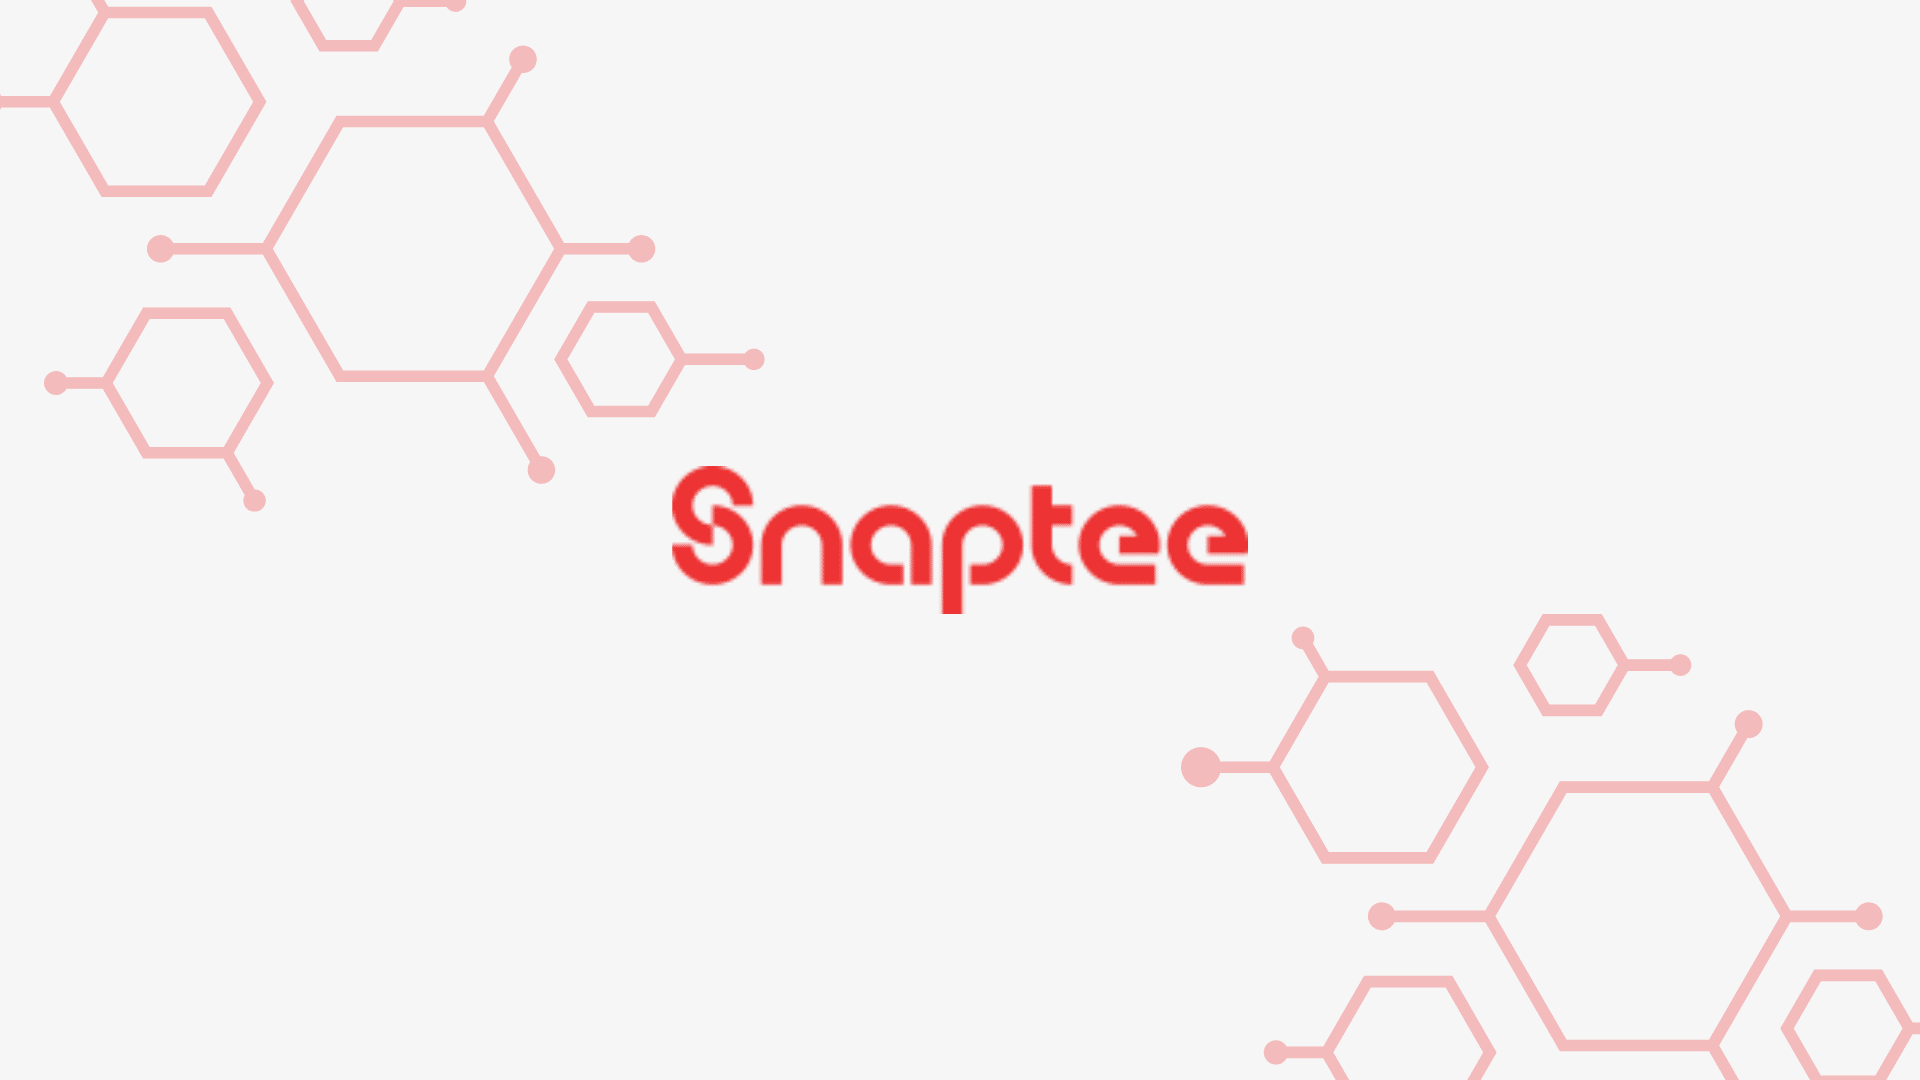 Snaptee Logo